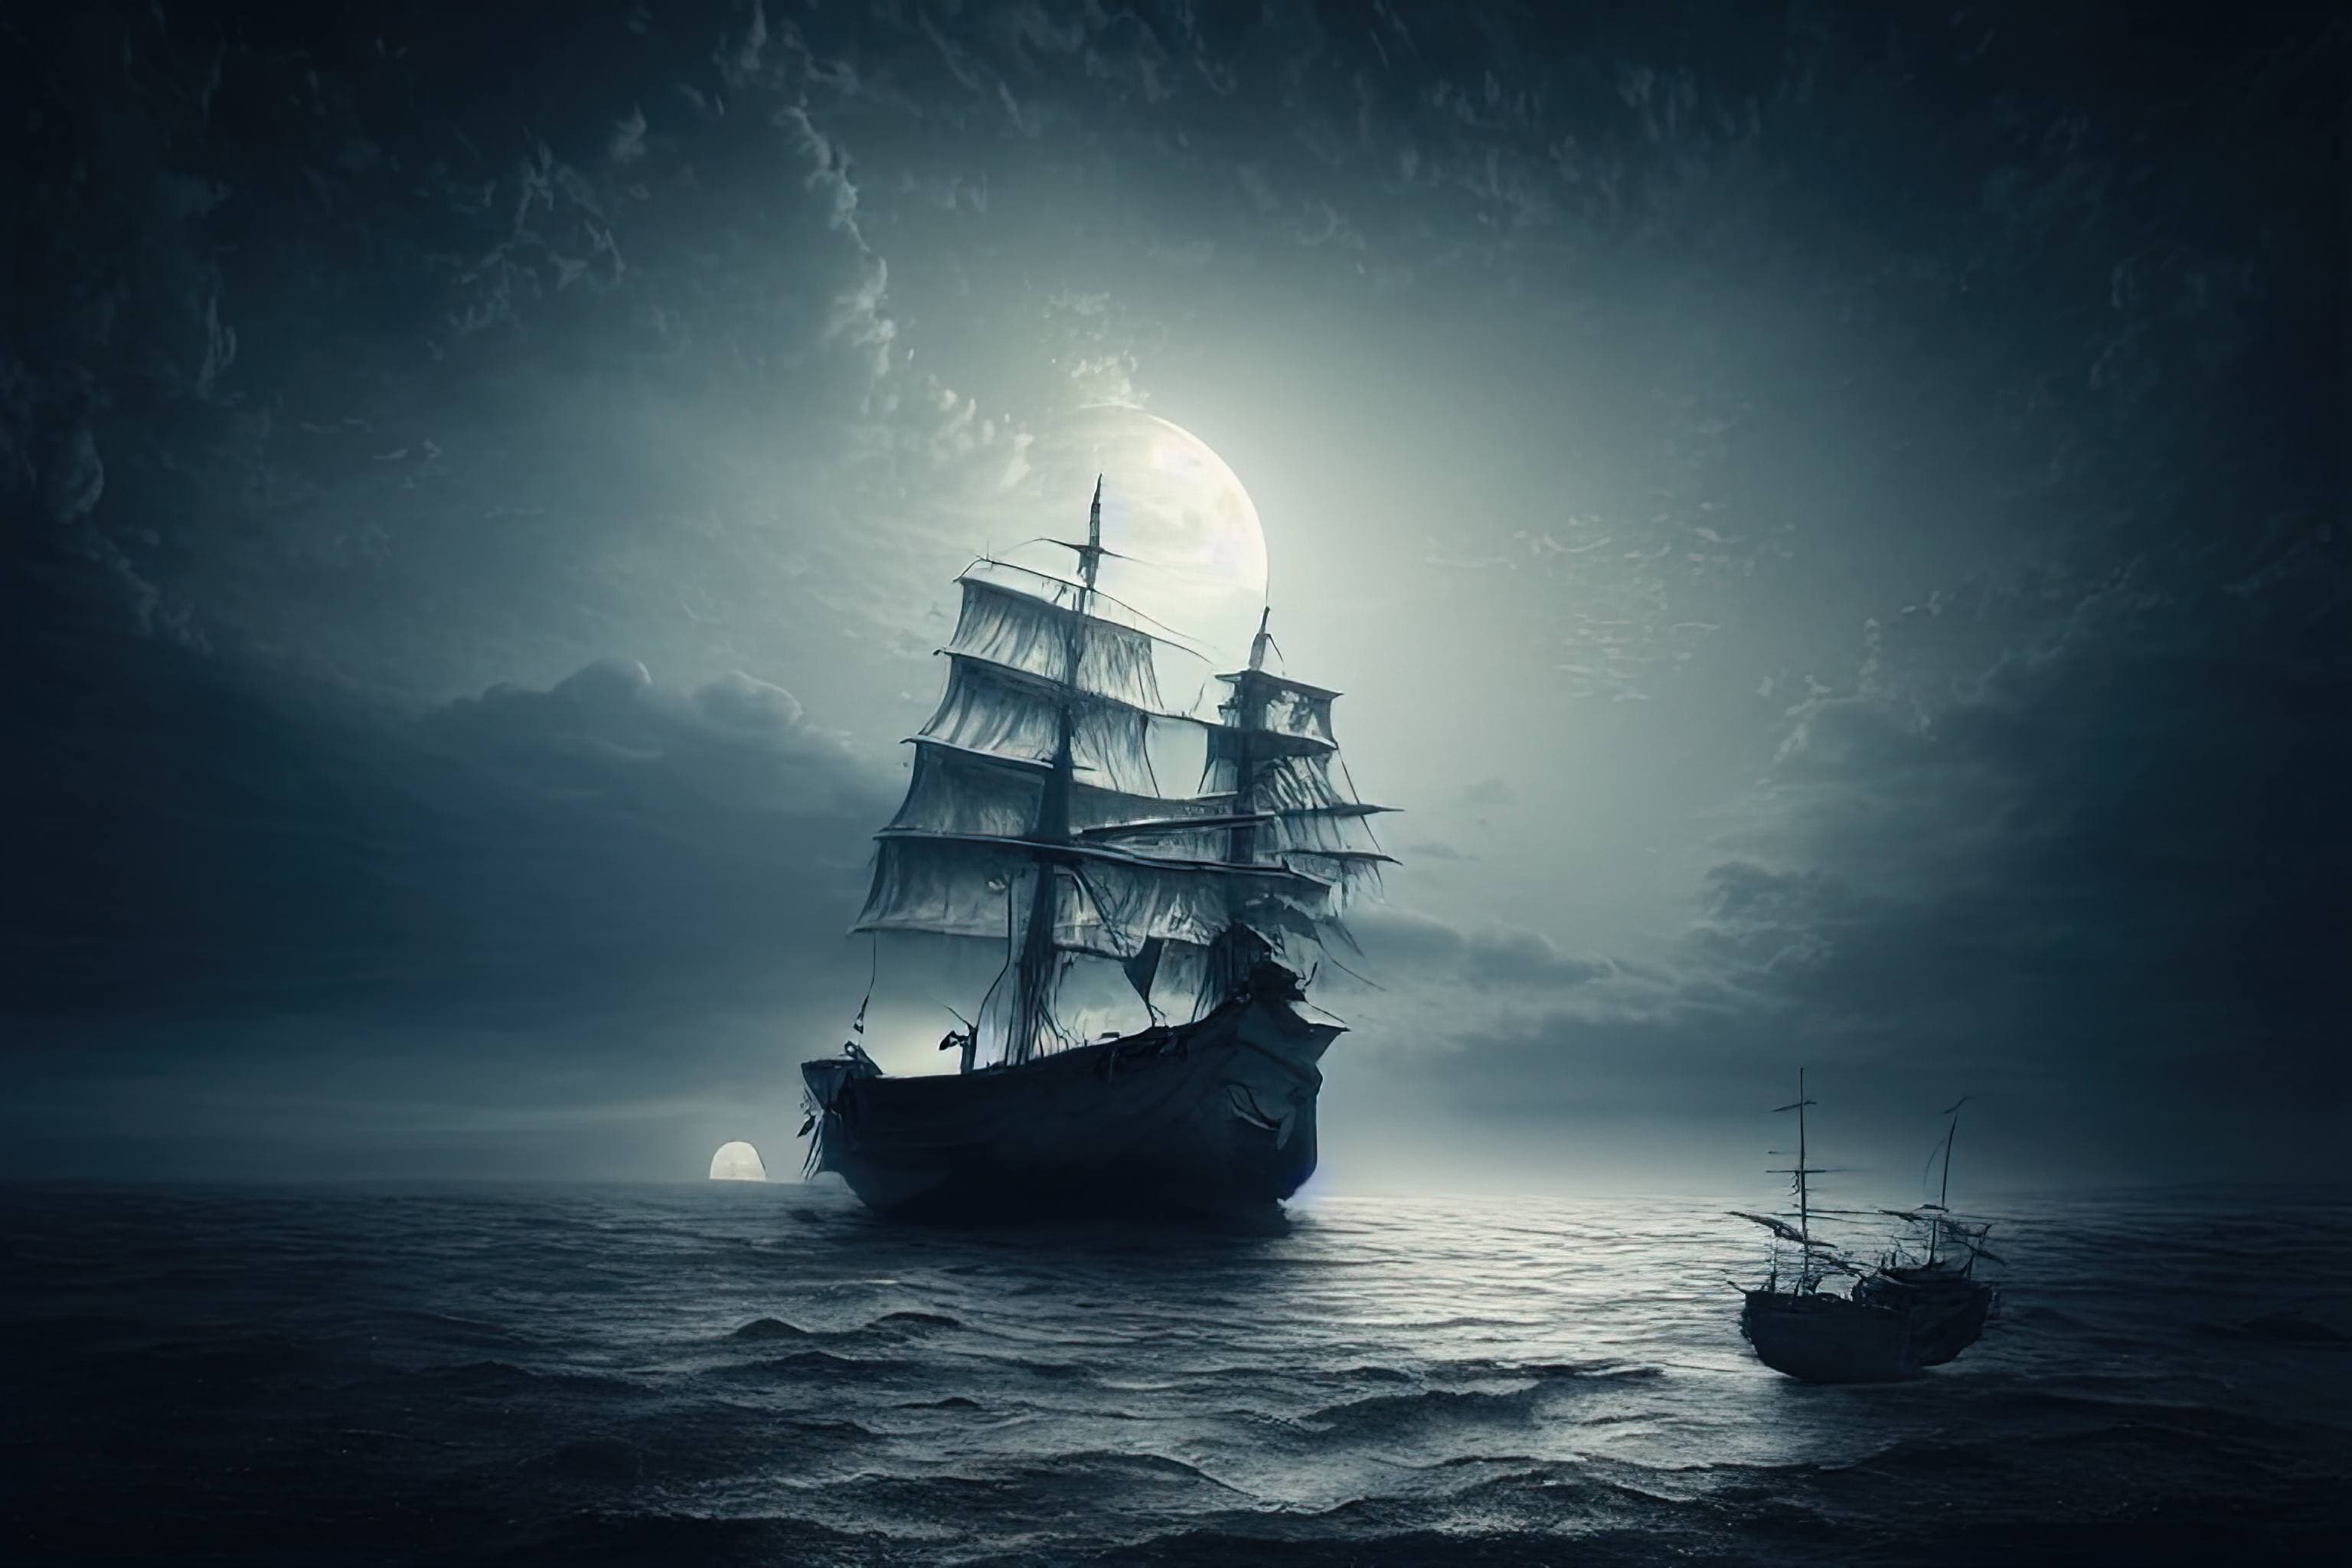 A pirate ship is illuminated